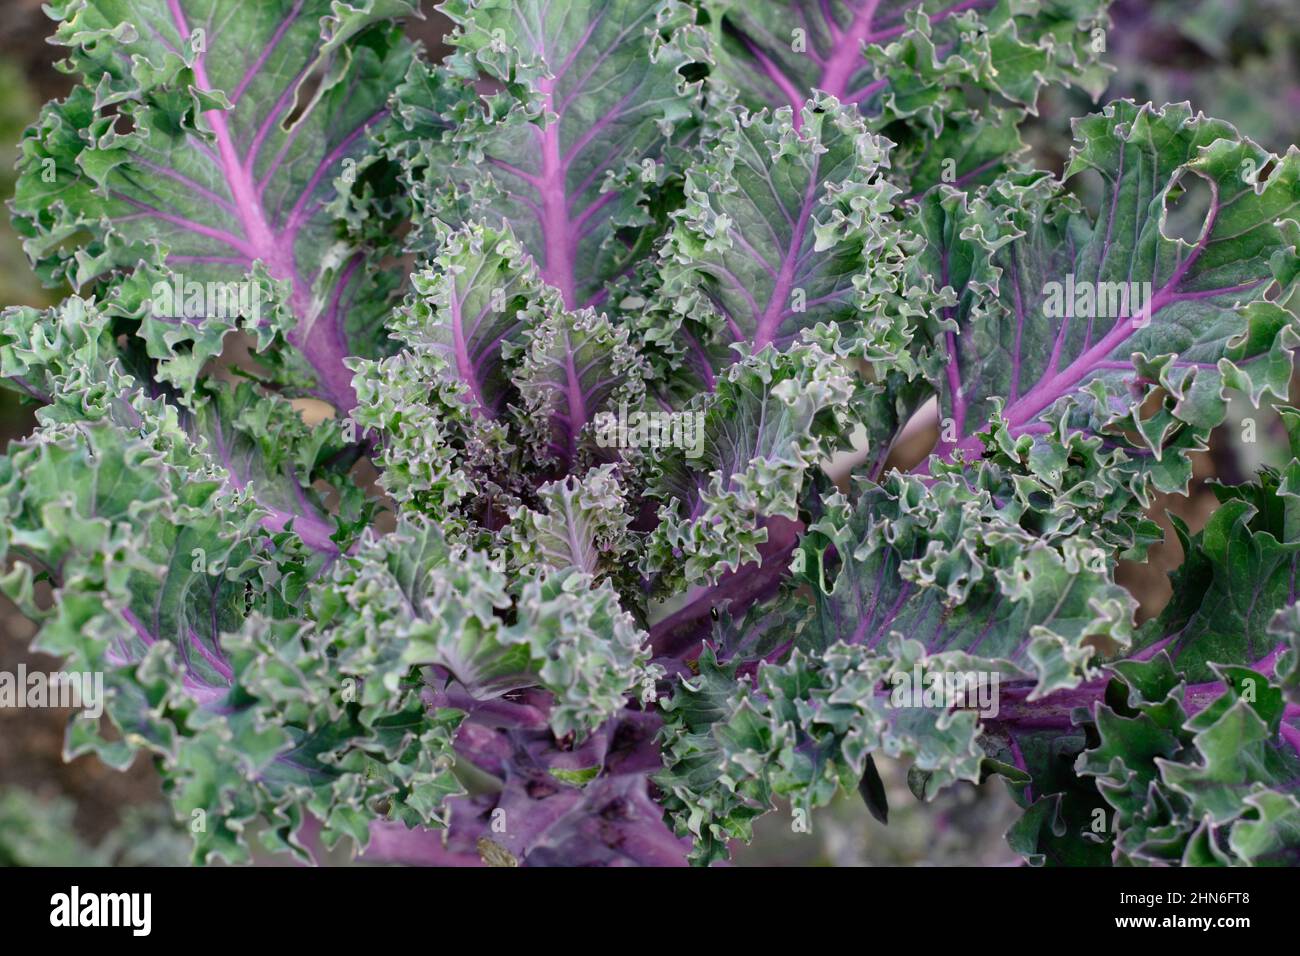 Brassica oleracea 'Midnight Sun' col rizada ornamental hojas de col rizada con venas púrpuras. REINO UNIDO. Foto de stock